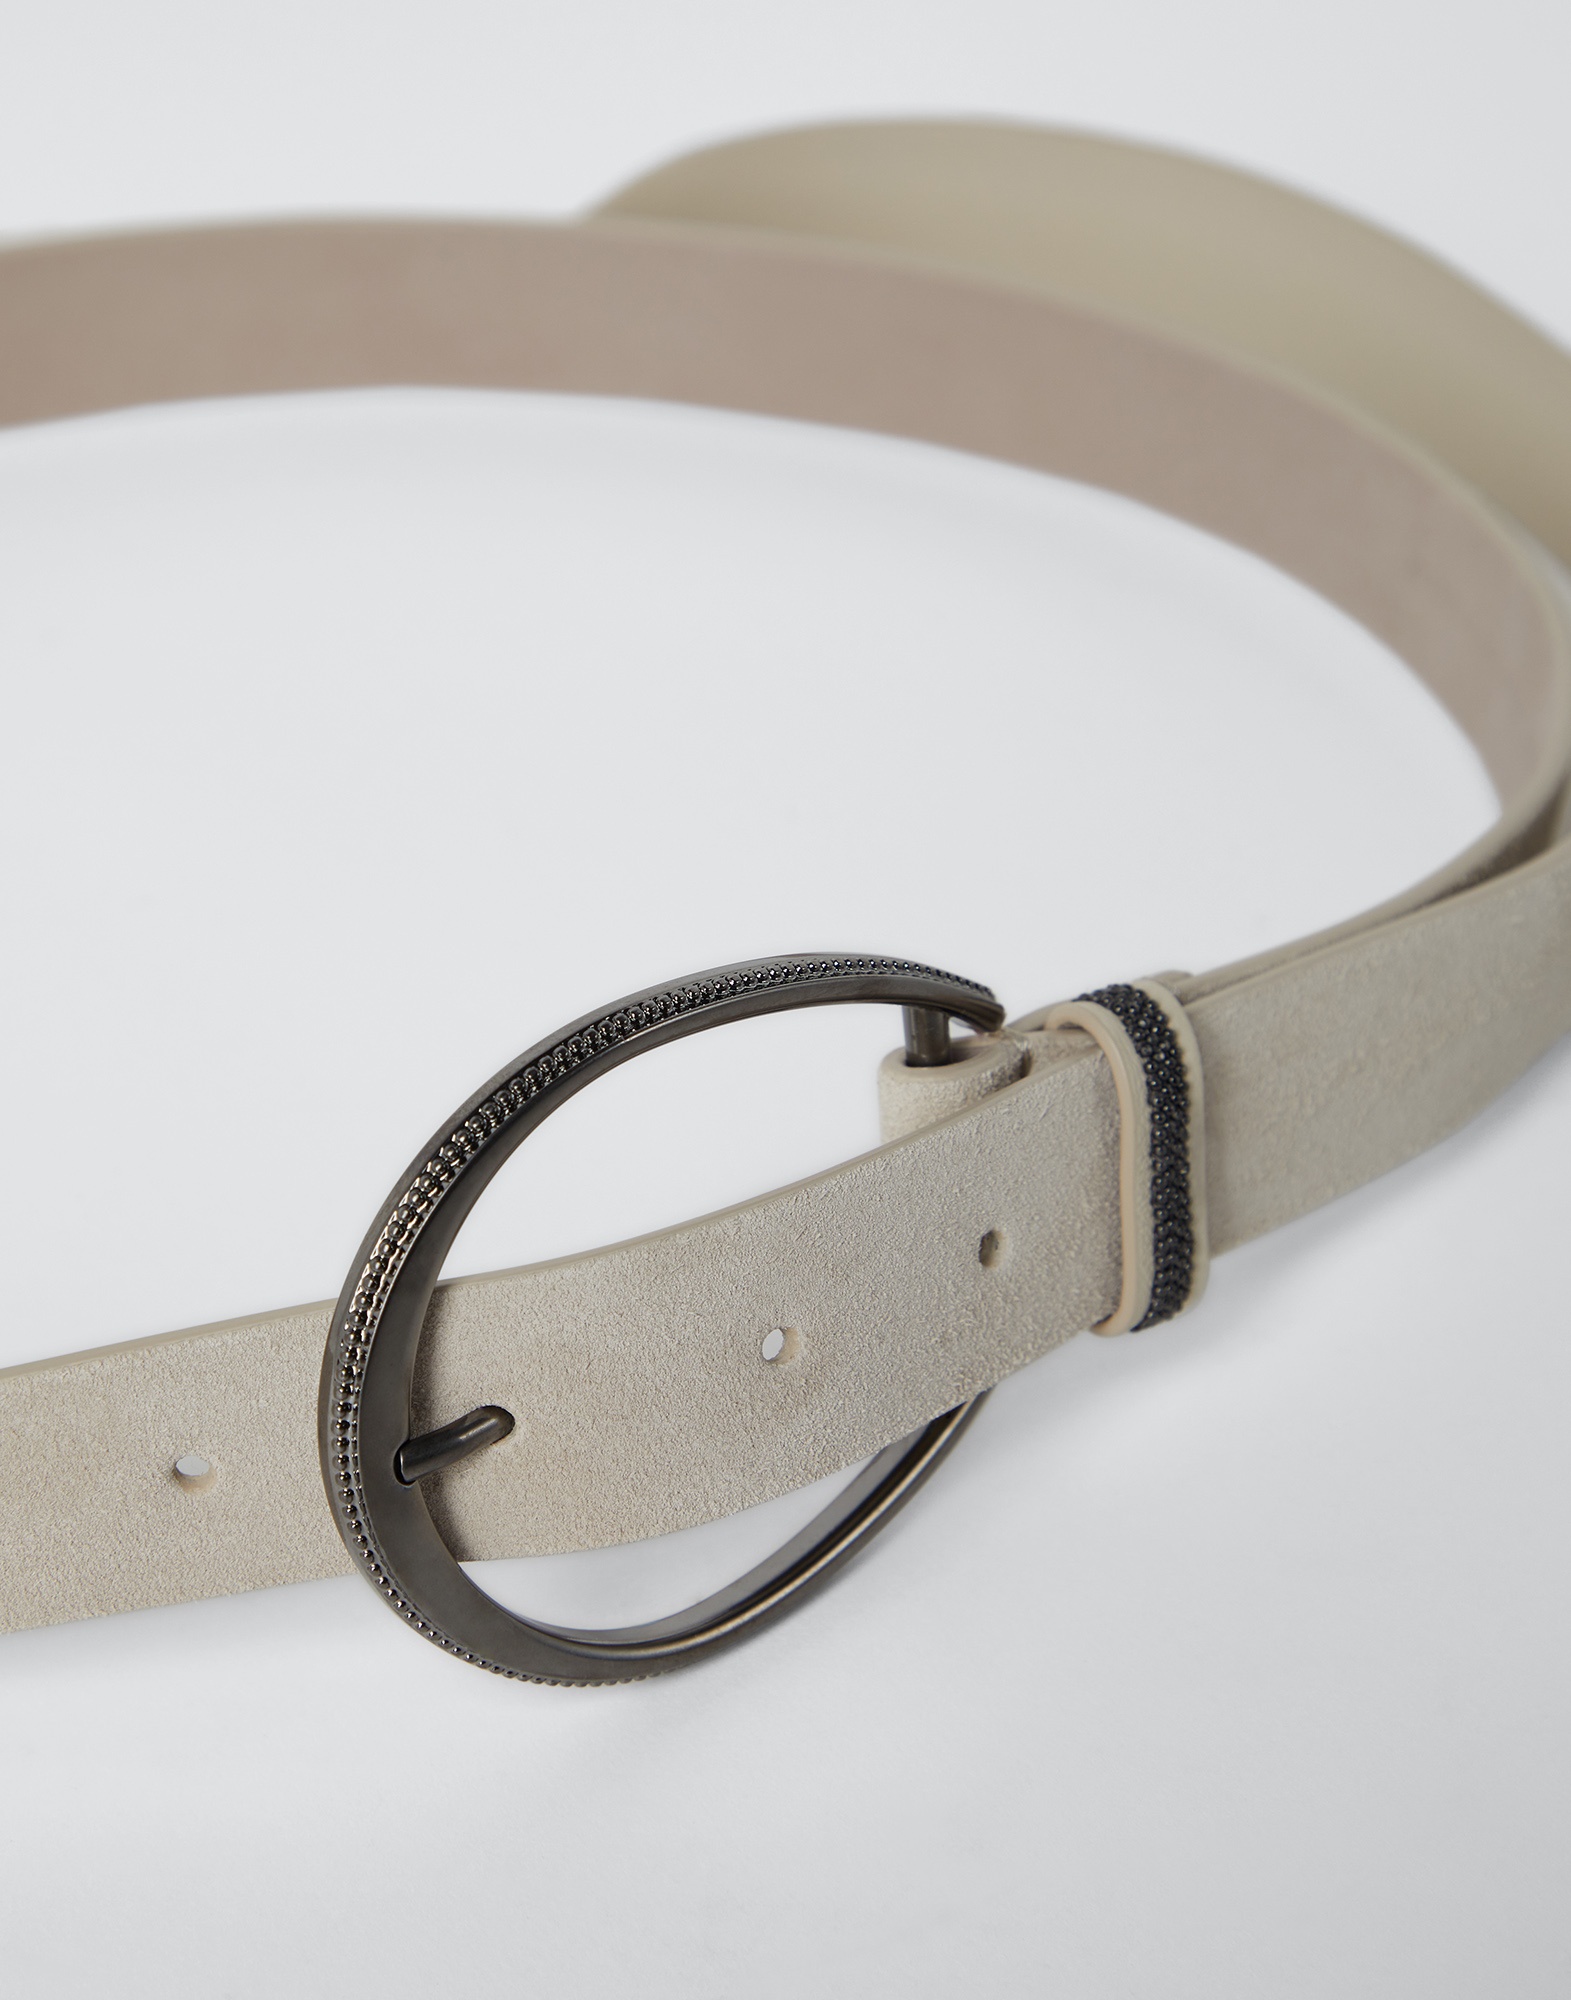 Suede-effect calfskin oval buckle belt with monili - 2